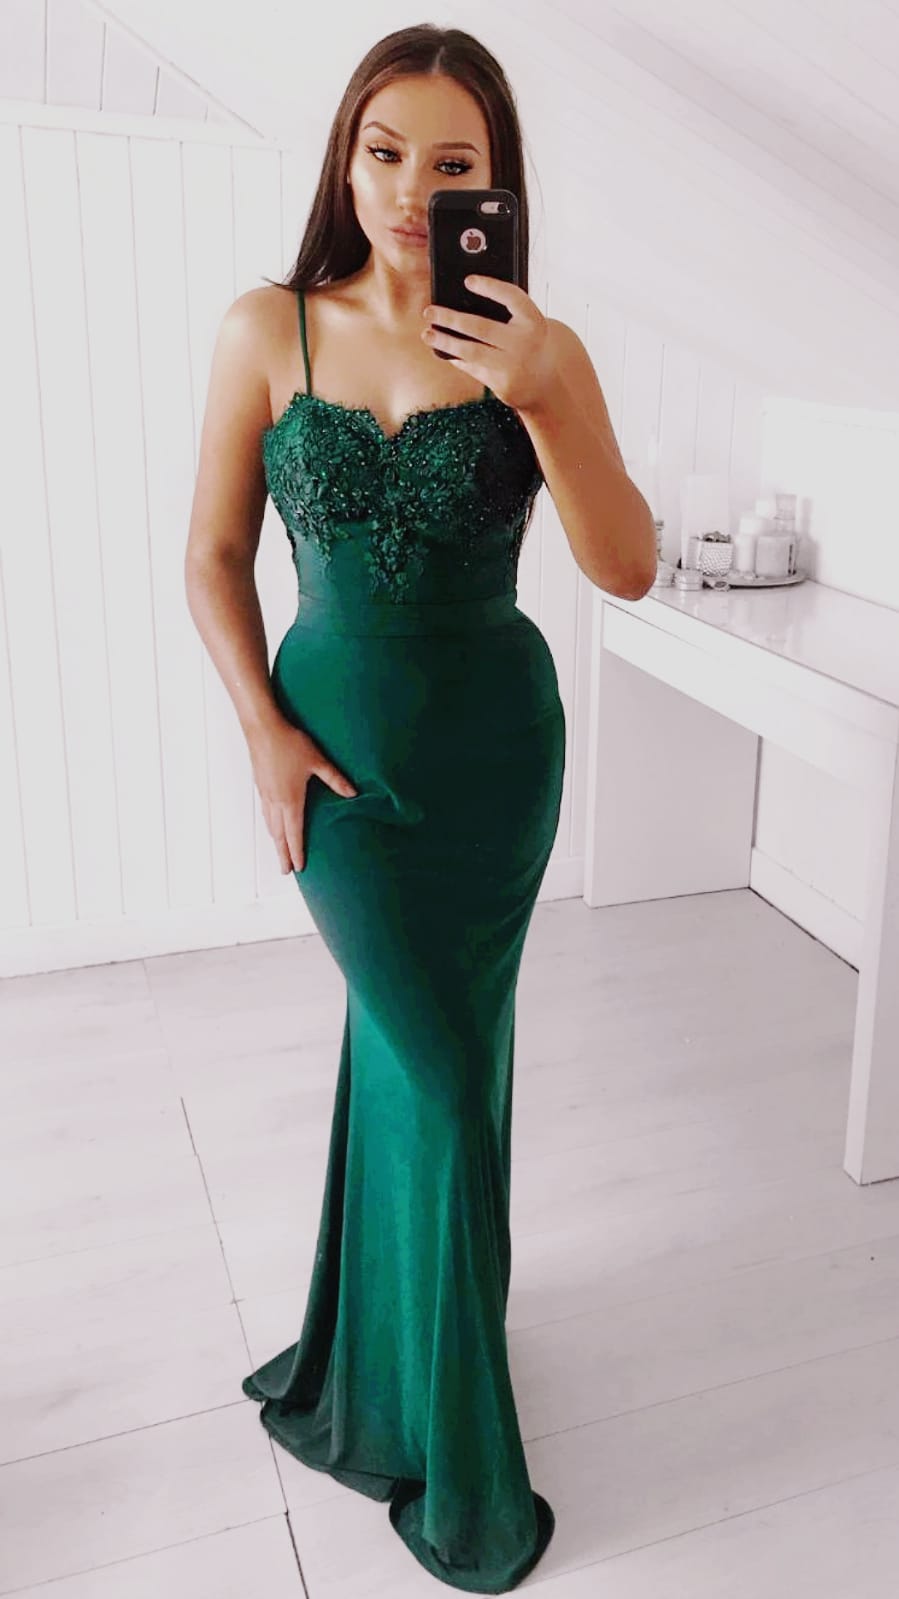 Cheryl Emerald Green Skinny Strap Formal Prom Dress 3089